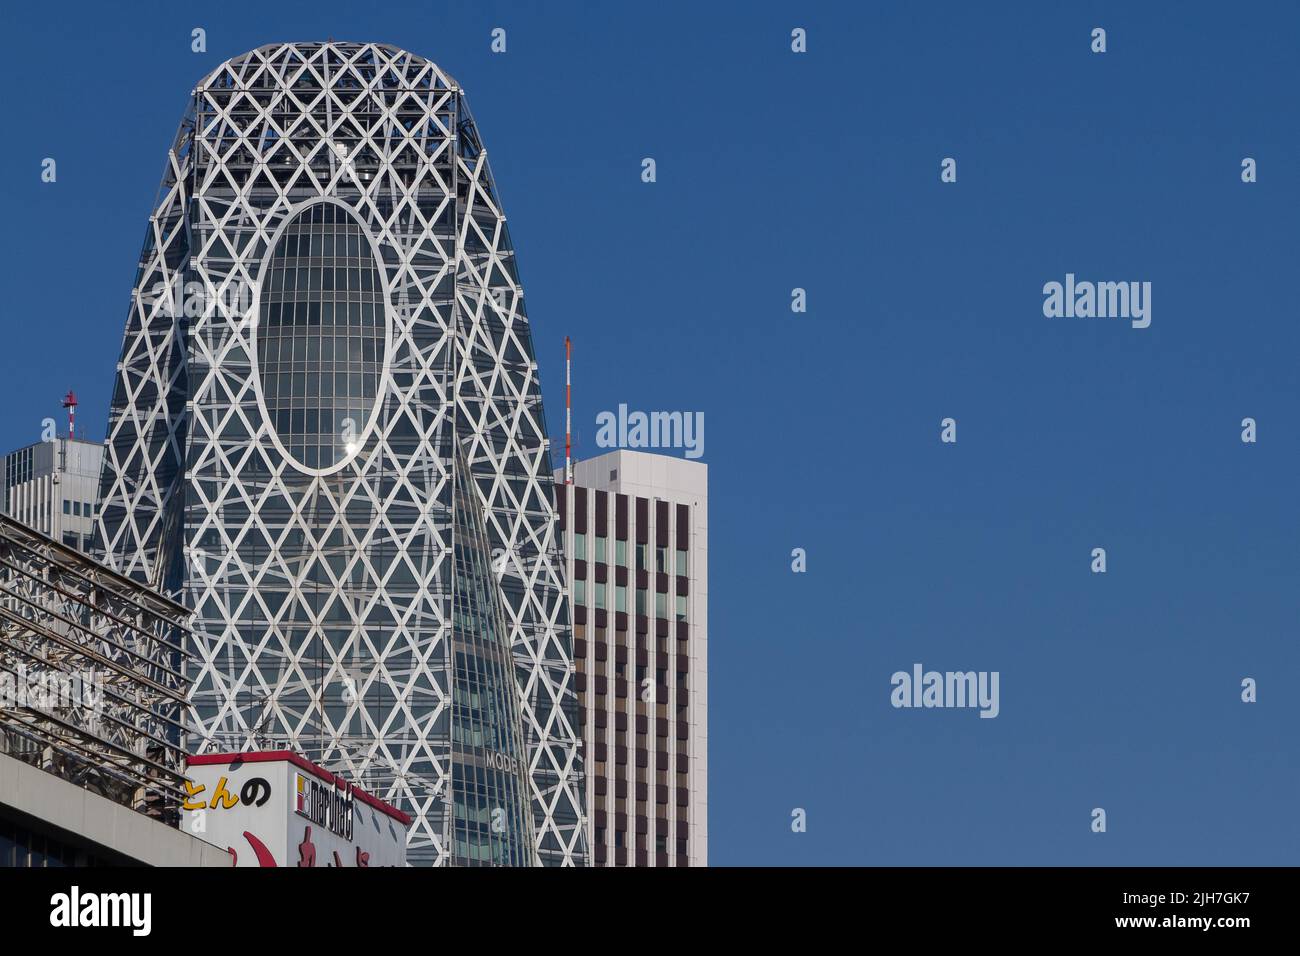 The distinctive architecture of the Mode Gakuen Cocoon Tower. Shinjuku, Tokyo, Japan. Stock Photo